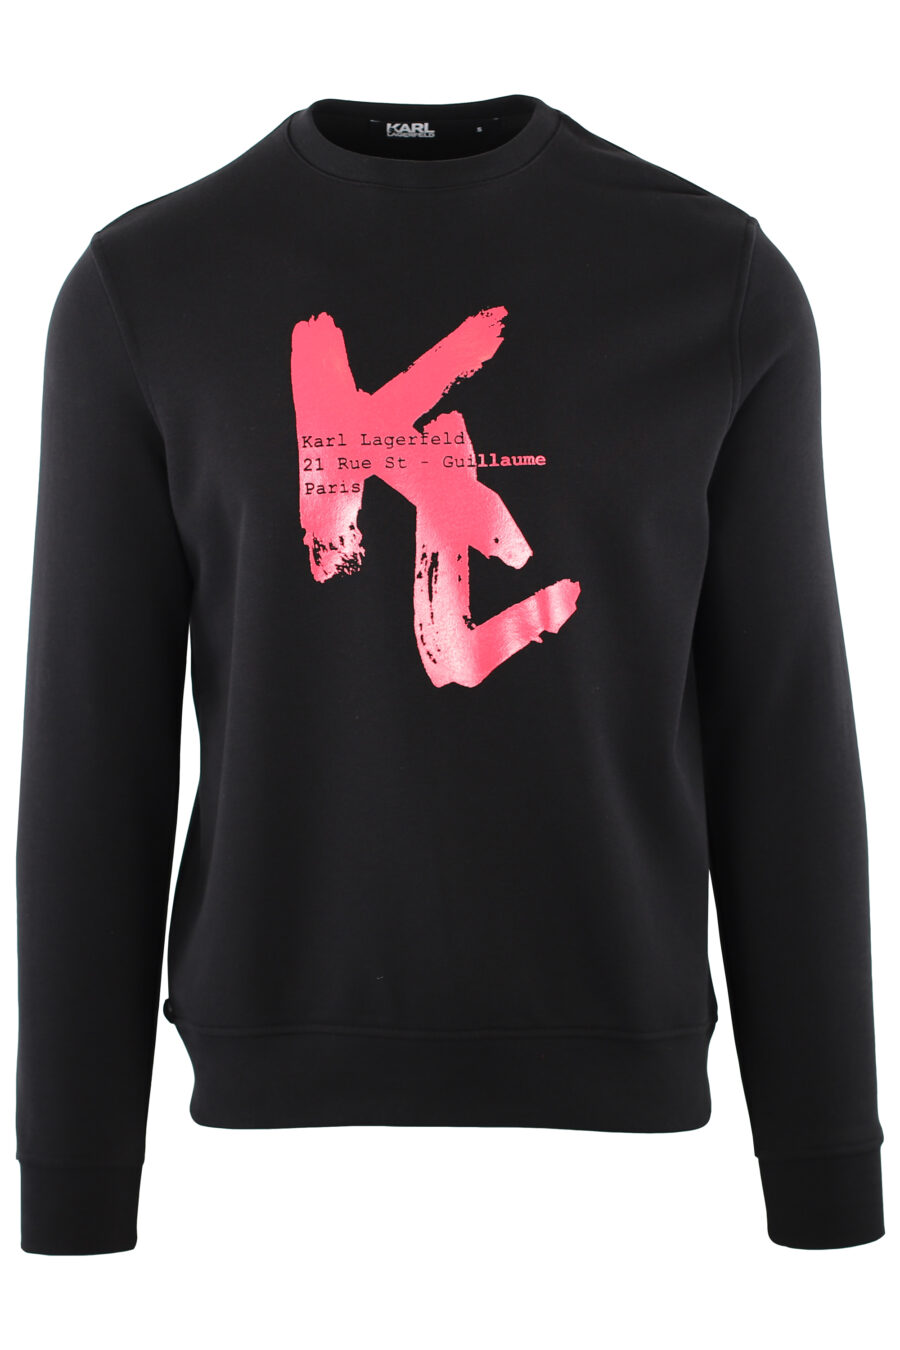 Black sweatshirt with fuchsia maxi logo - IMG 7446